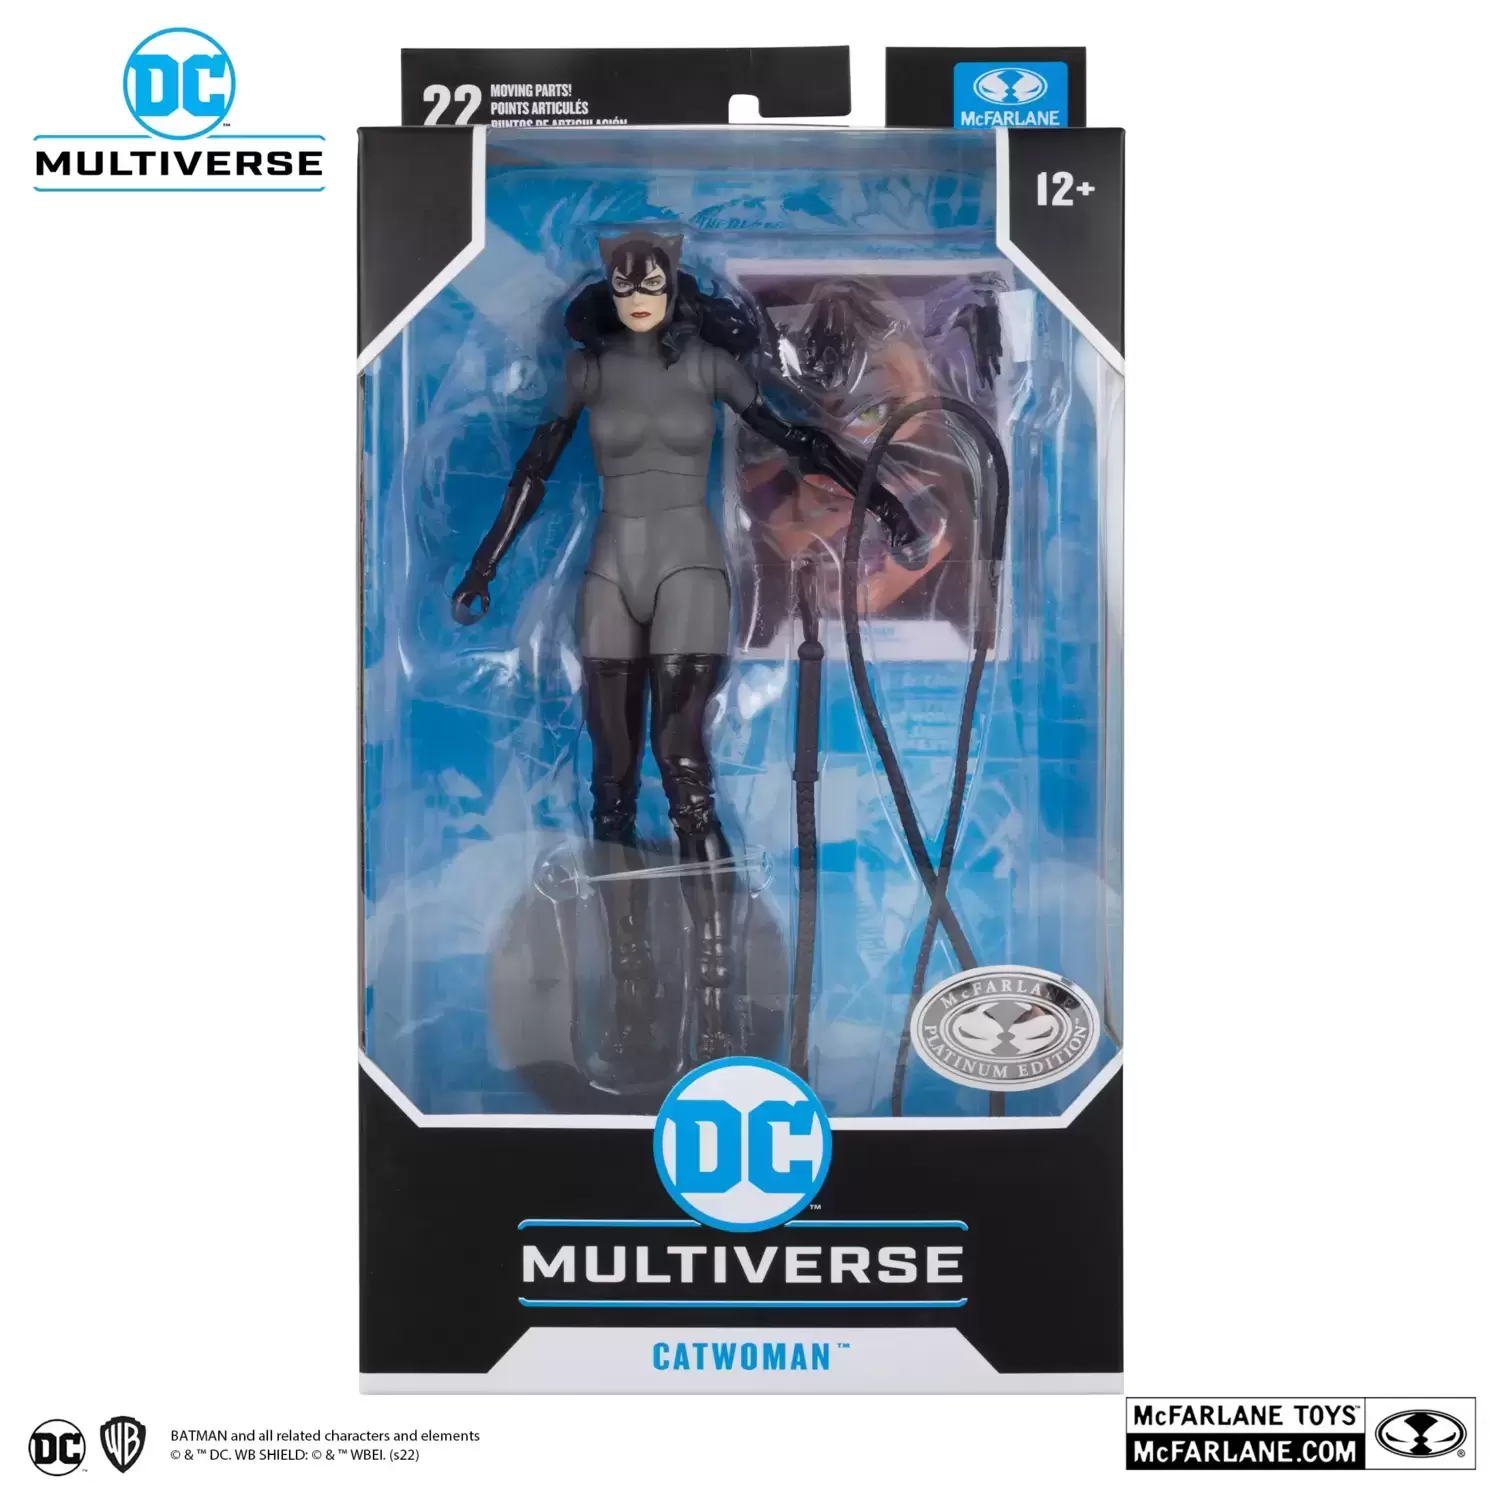 McFarlane - DC Multiverse - Catwoman - Batman: Knightfall (Platinum Edition)